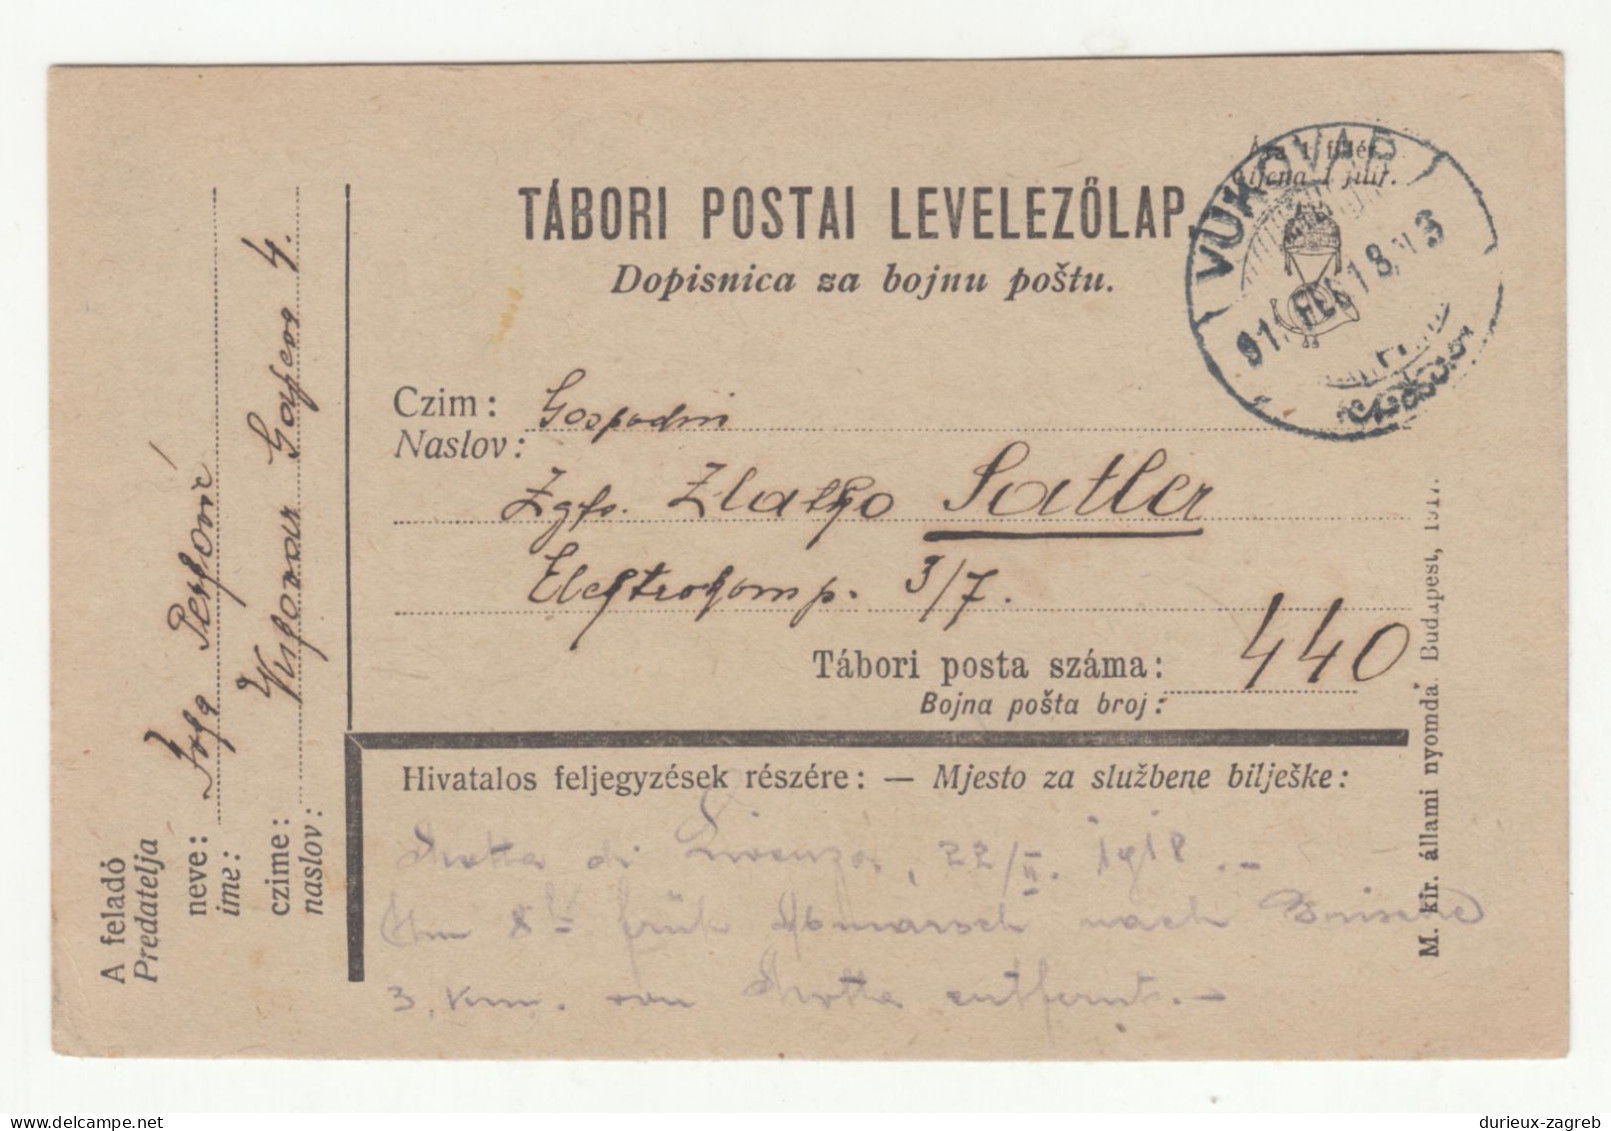 Hungary Croatia Postal Stationery Tabori Postai Levelezőlap Dopisnica Za Bojnu Poštu Posted 1918 Vukovar Pmk B240401 - Croatia